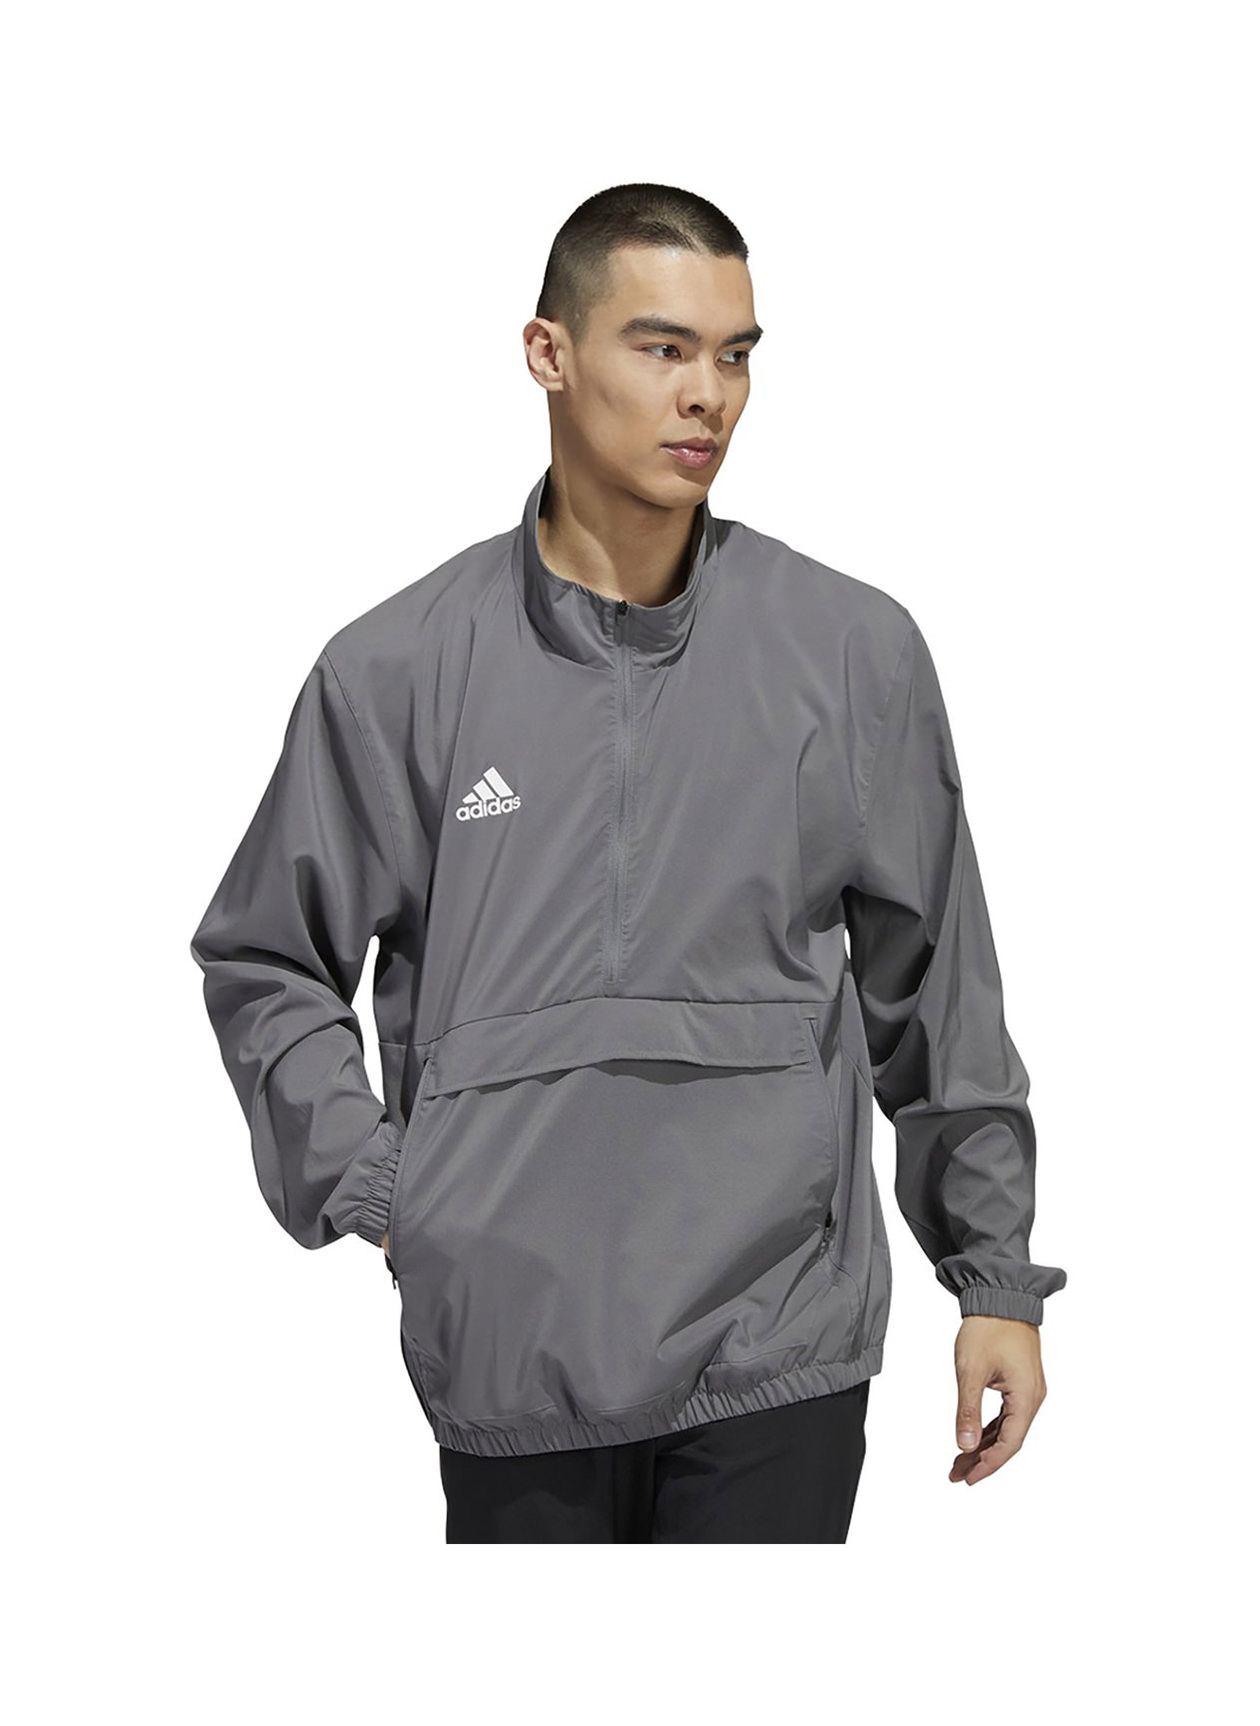 Adidas Men's Team Grey Four / White Stadium Quarter-Zip Jacket